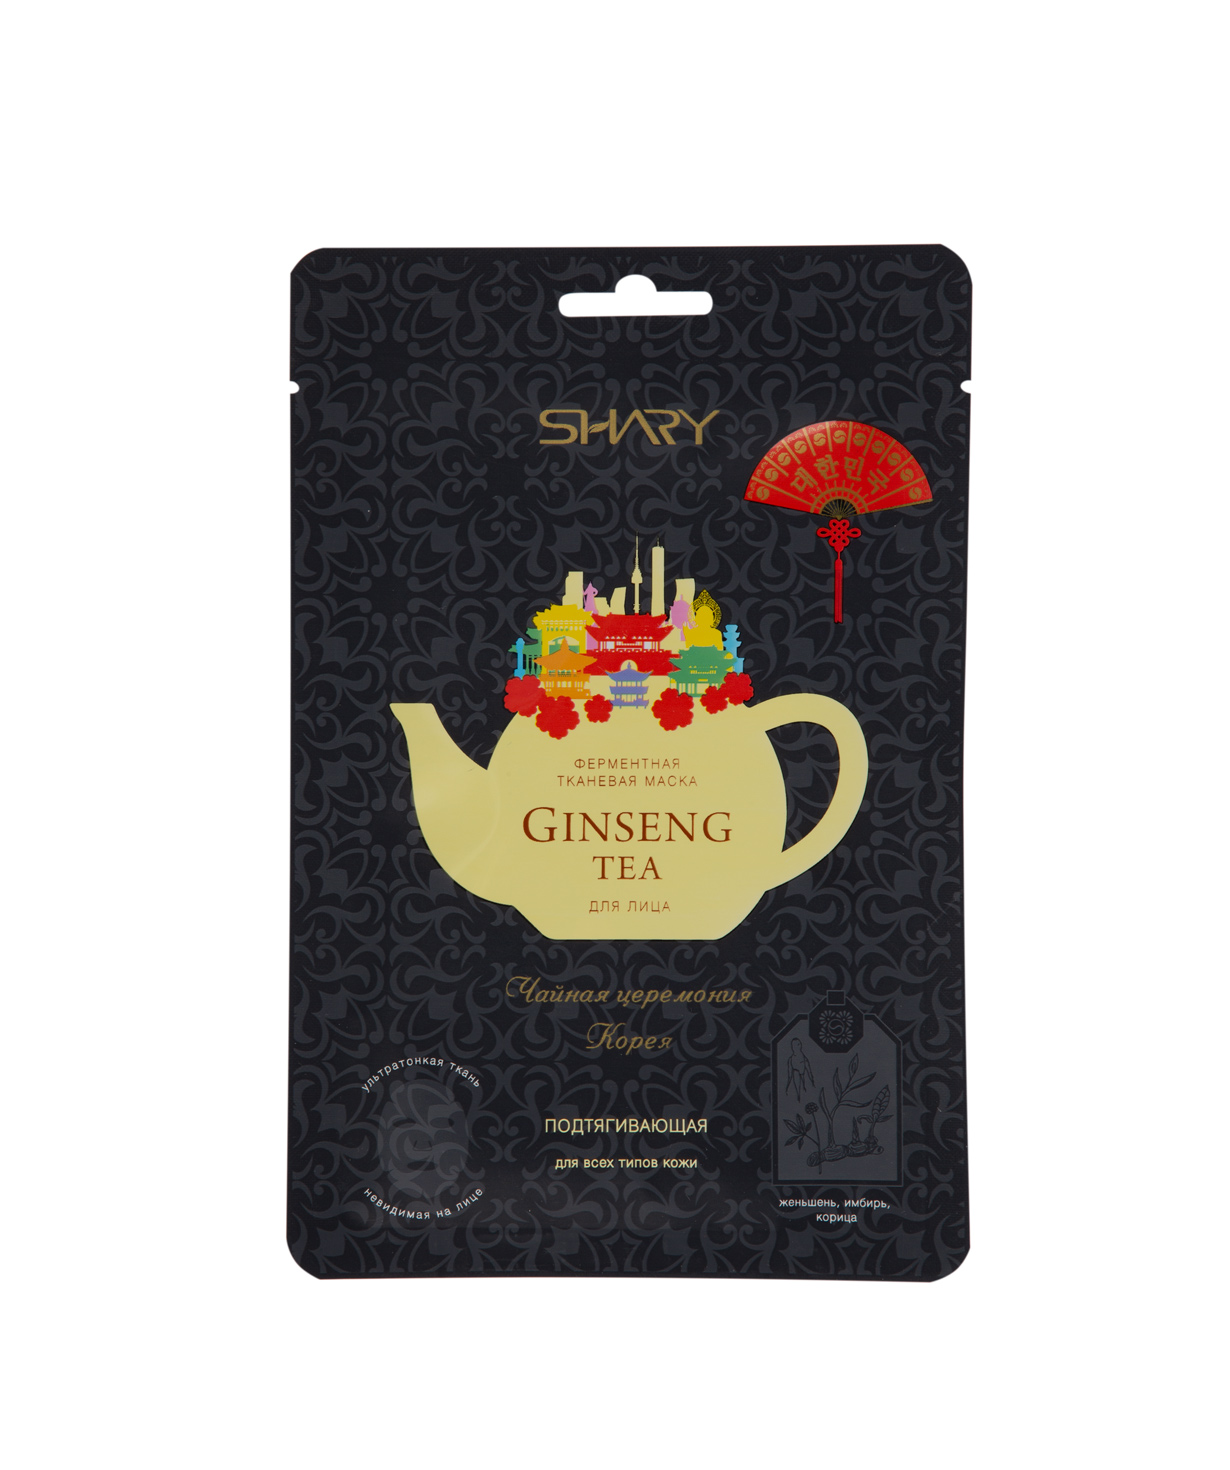 Fabric mask `Shary` ginseng tea